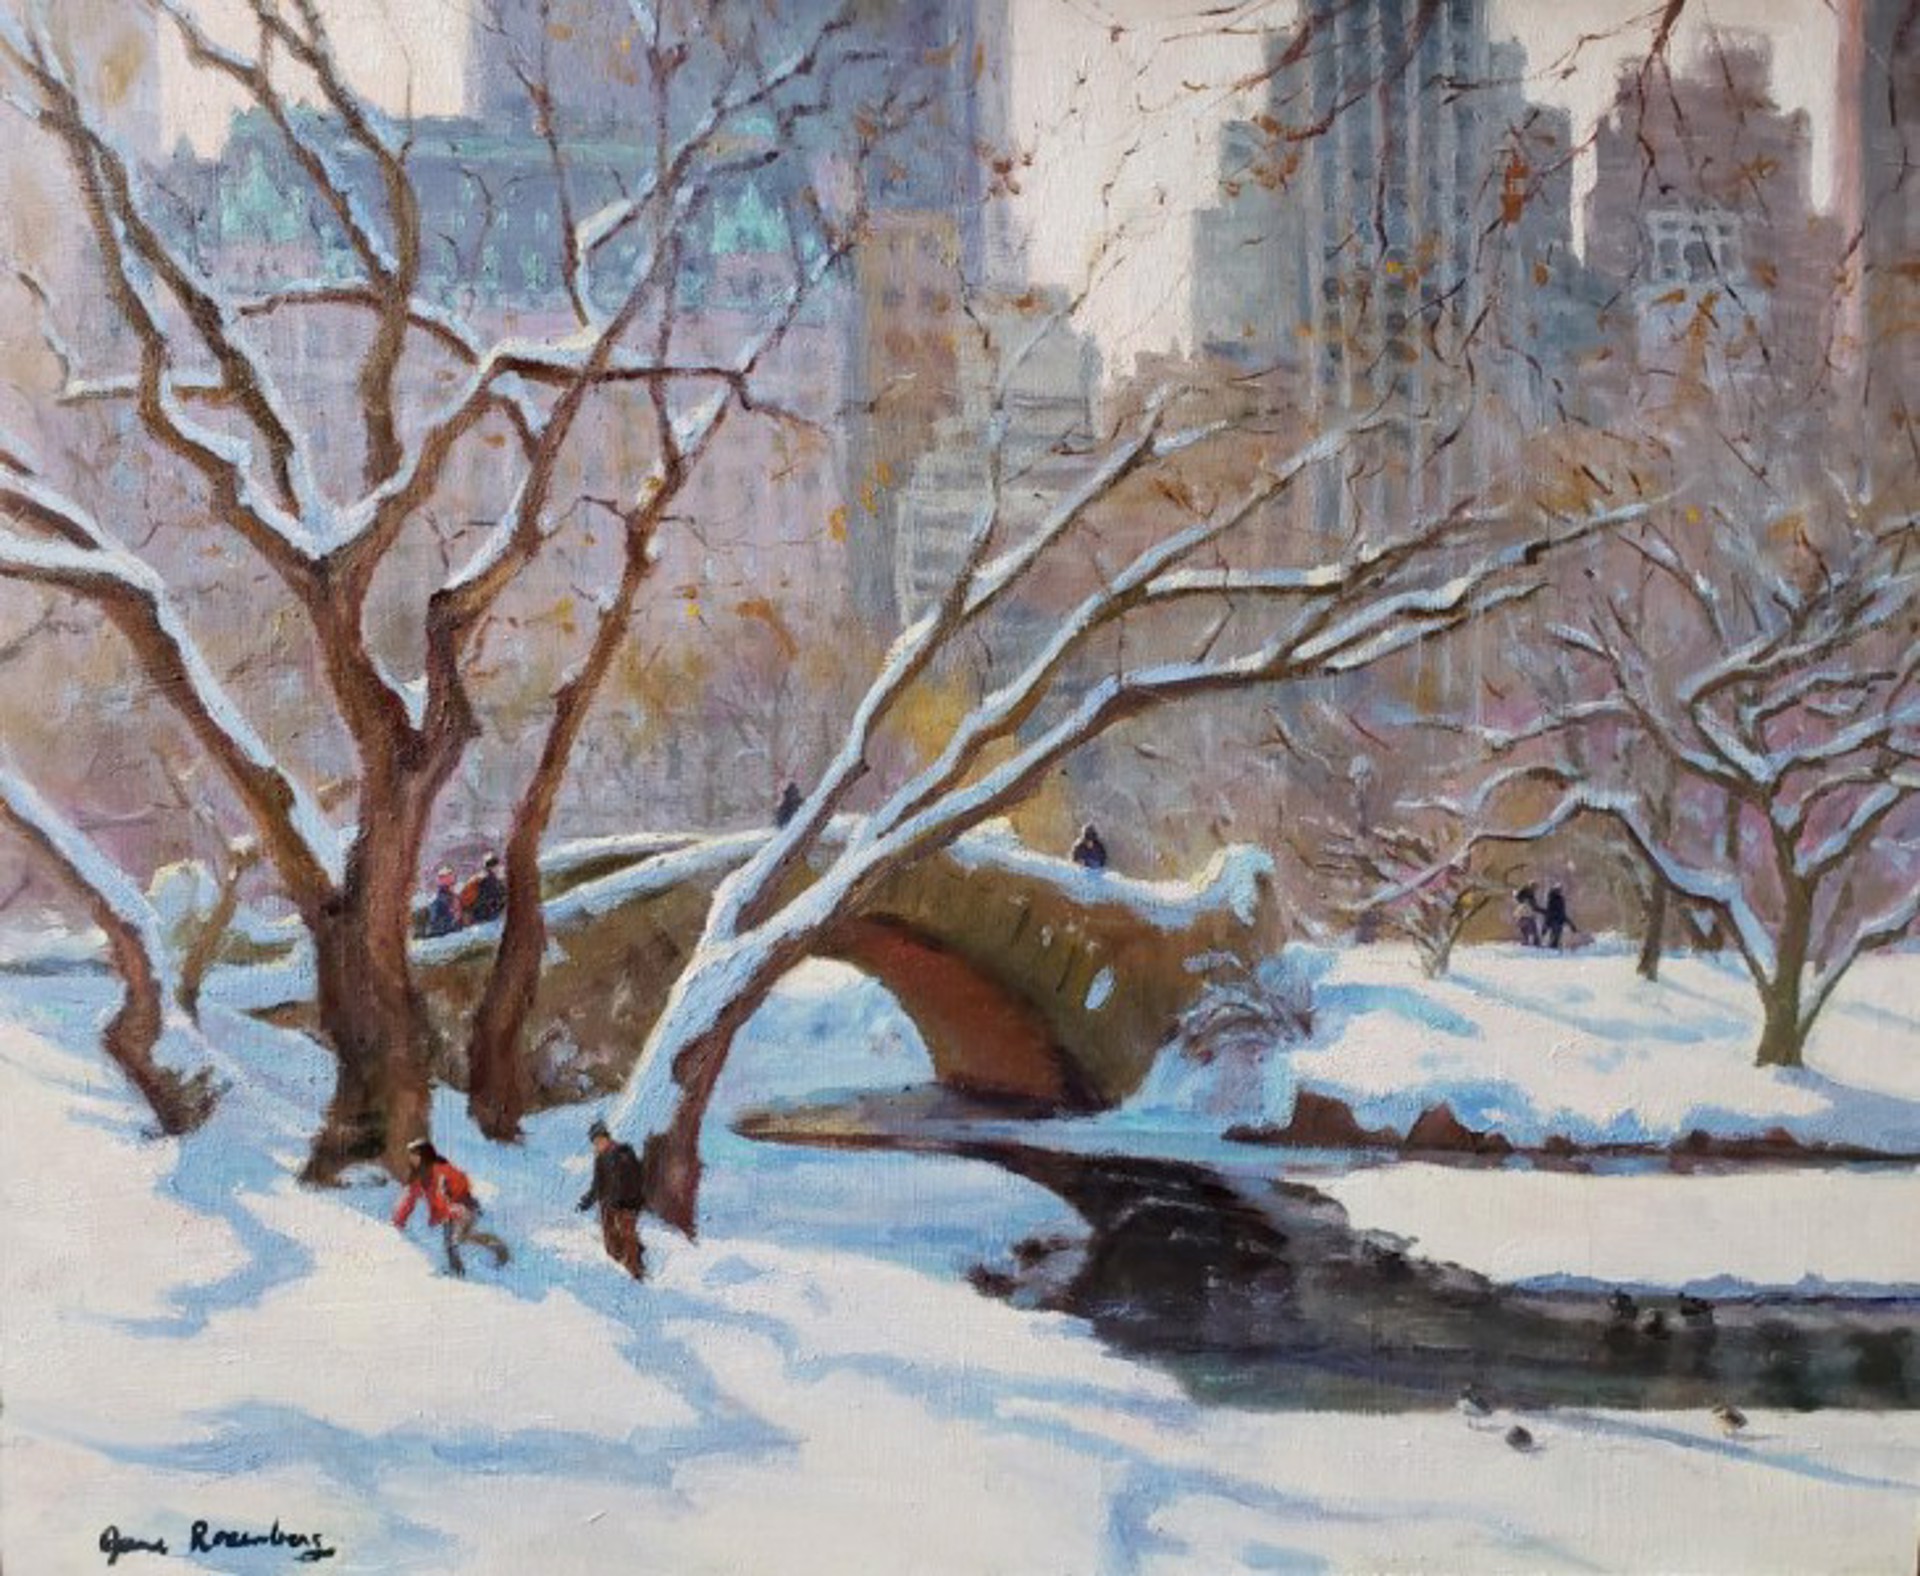 Central Park Snow at Gapstow Bridge by Jane Rosenberg